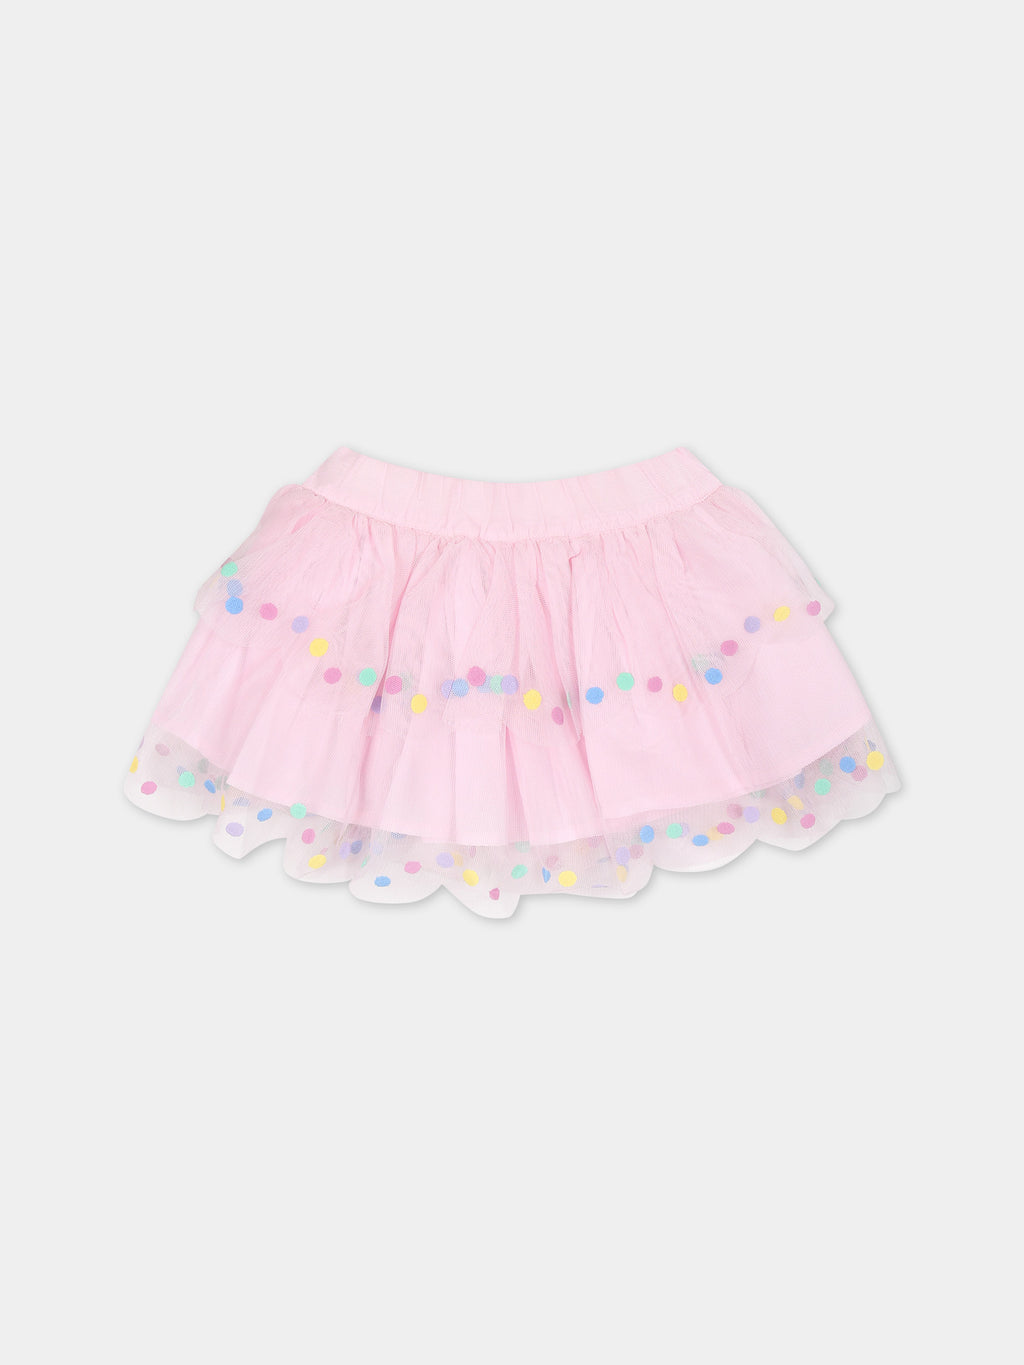 Pink tulle skirt for baby girl